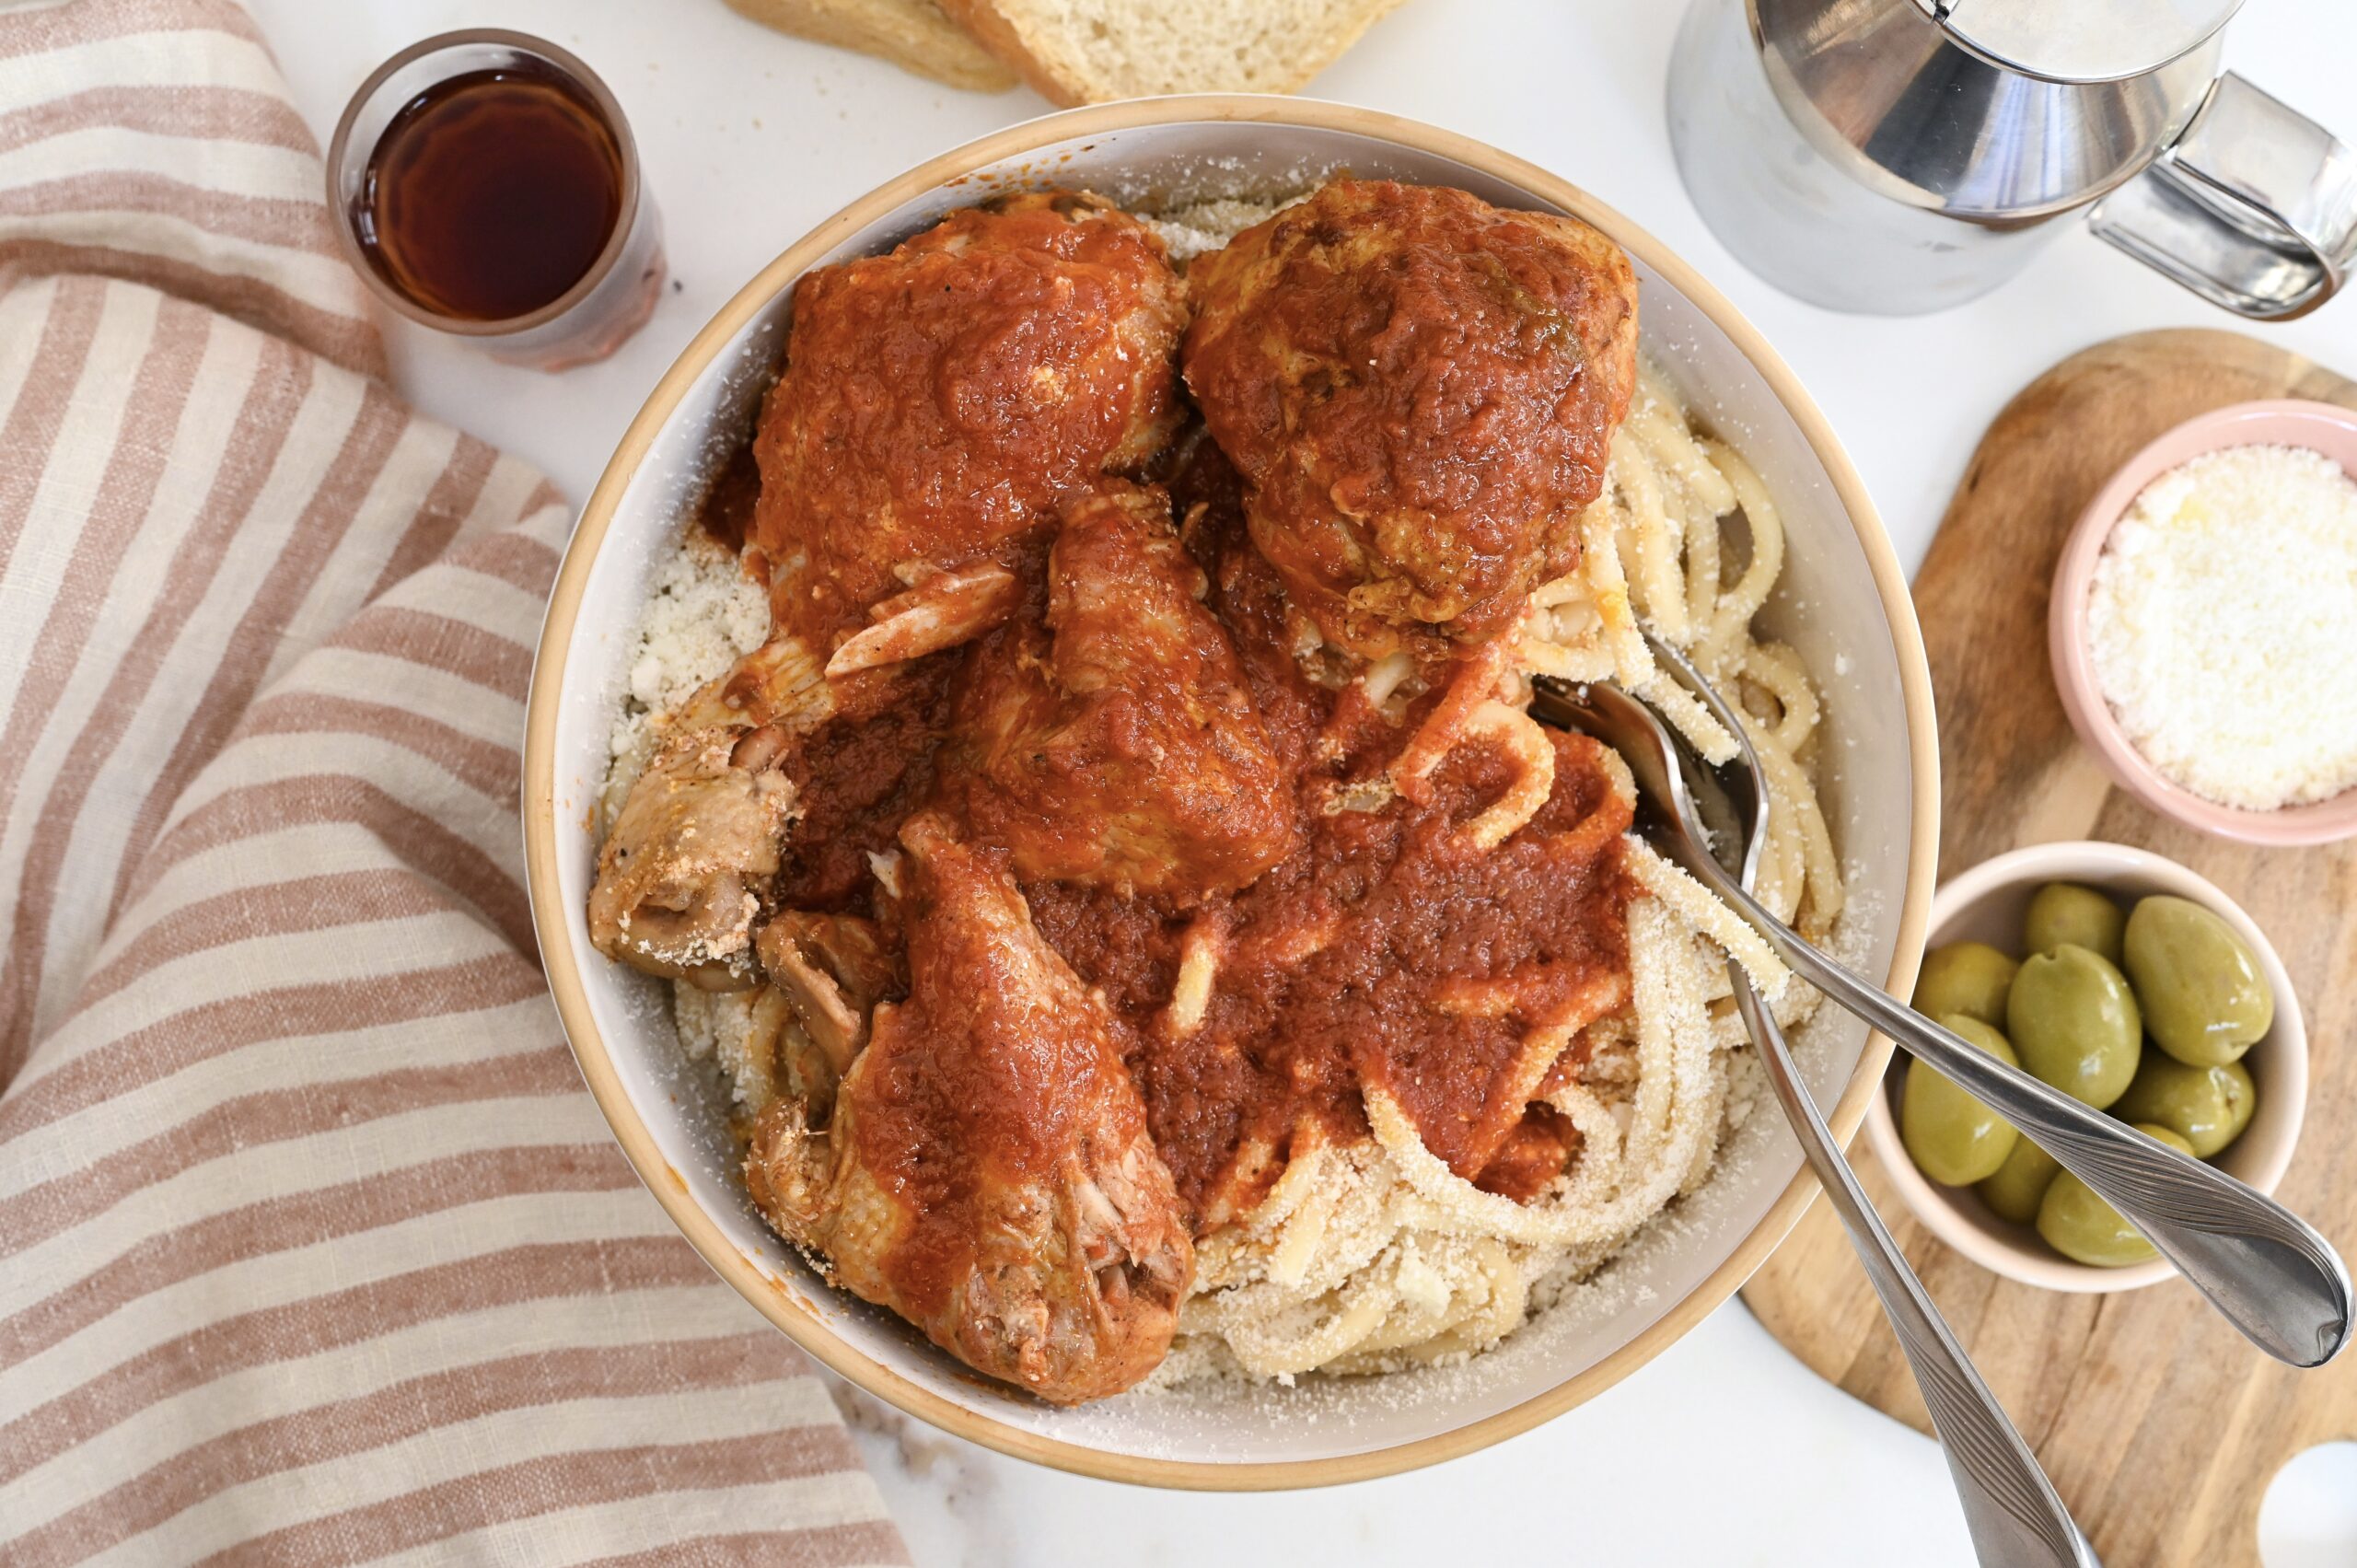 Rooster with pasta and tomato sauce (Kokora me makaronia)